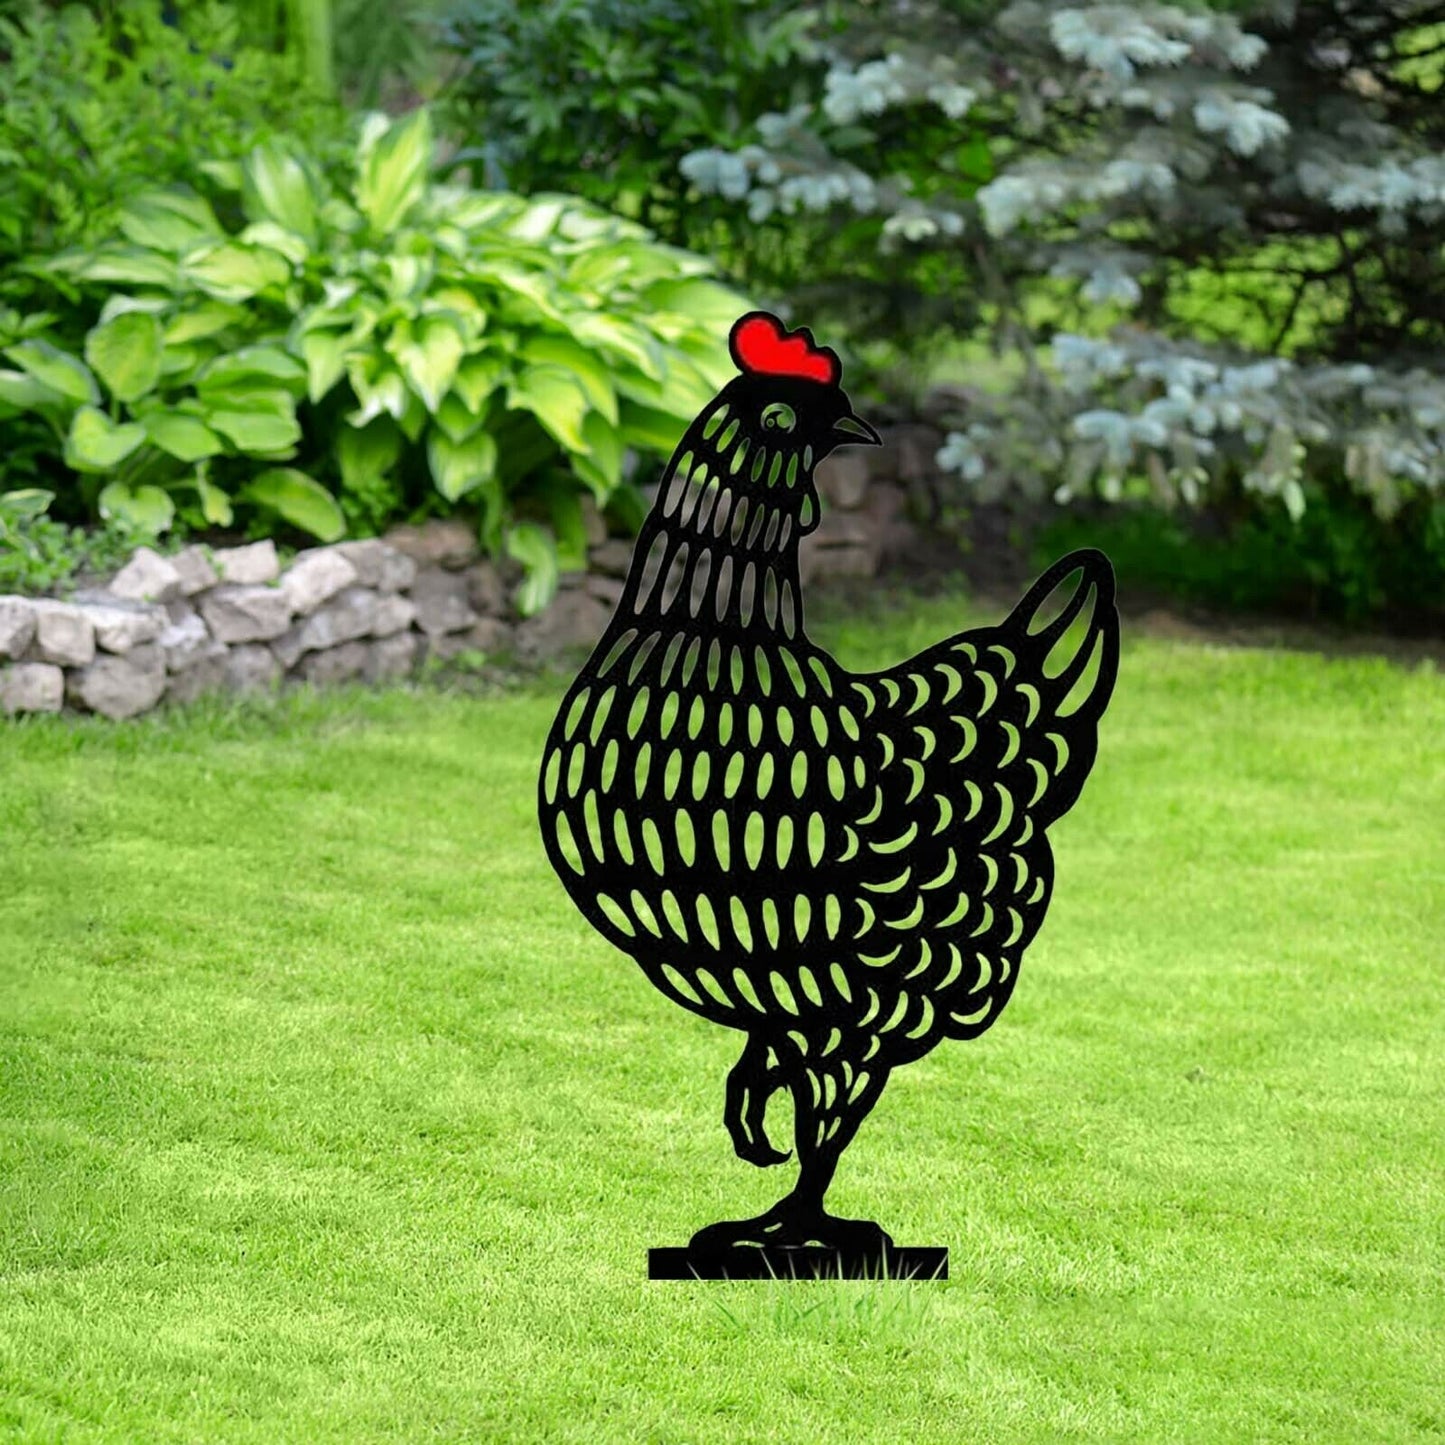 Artistic garden chicken coop